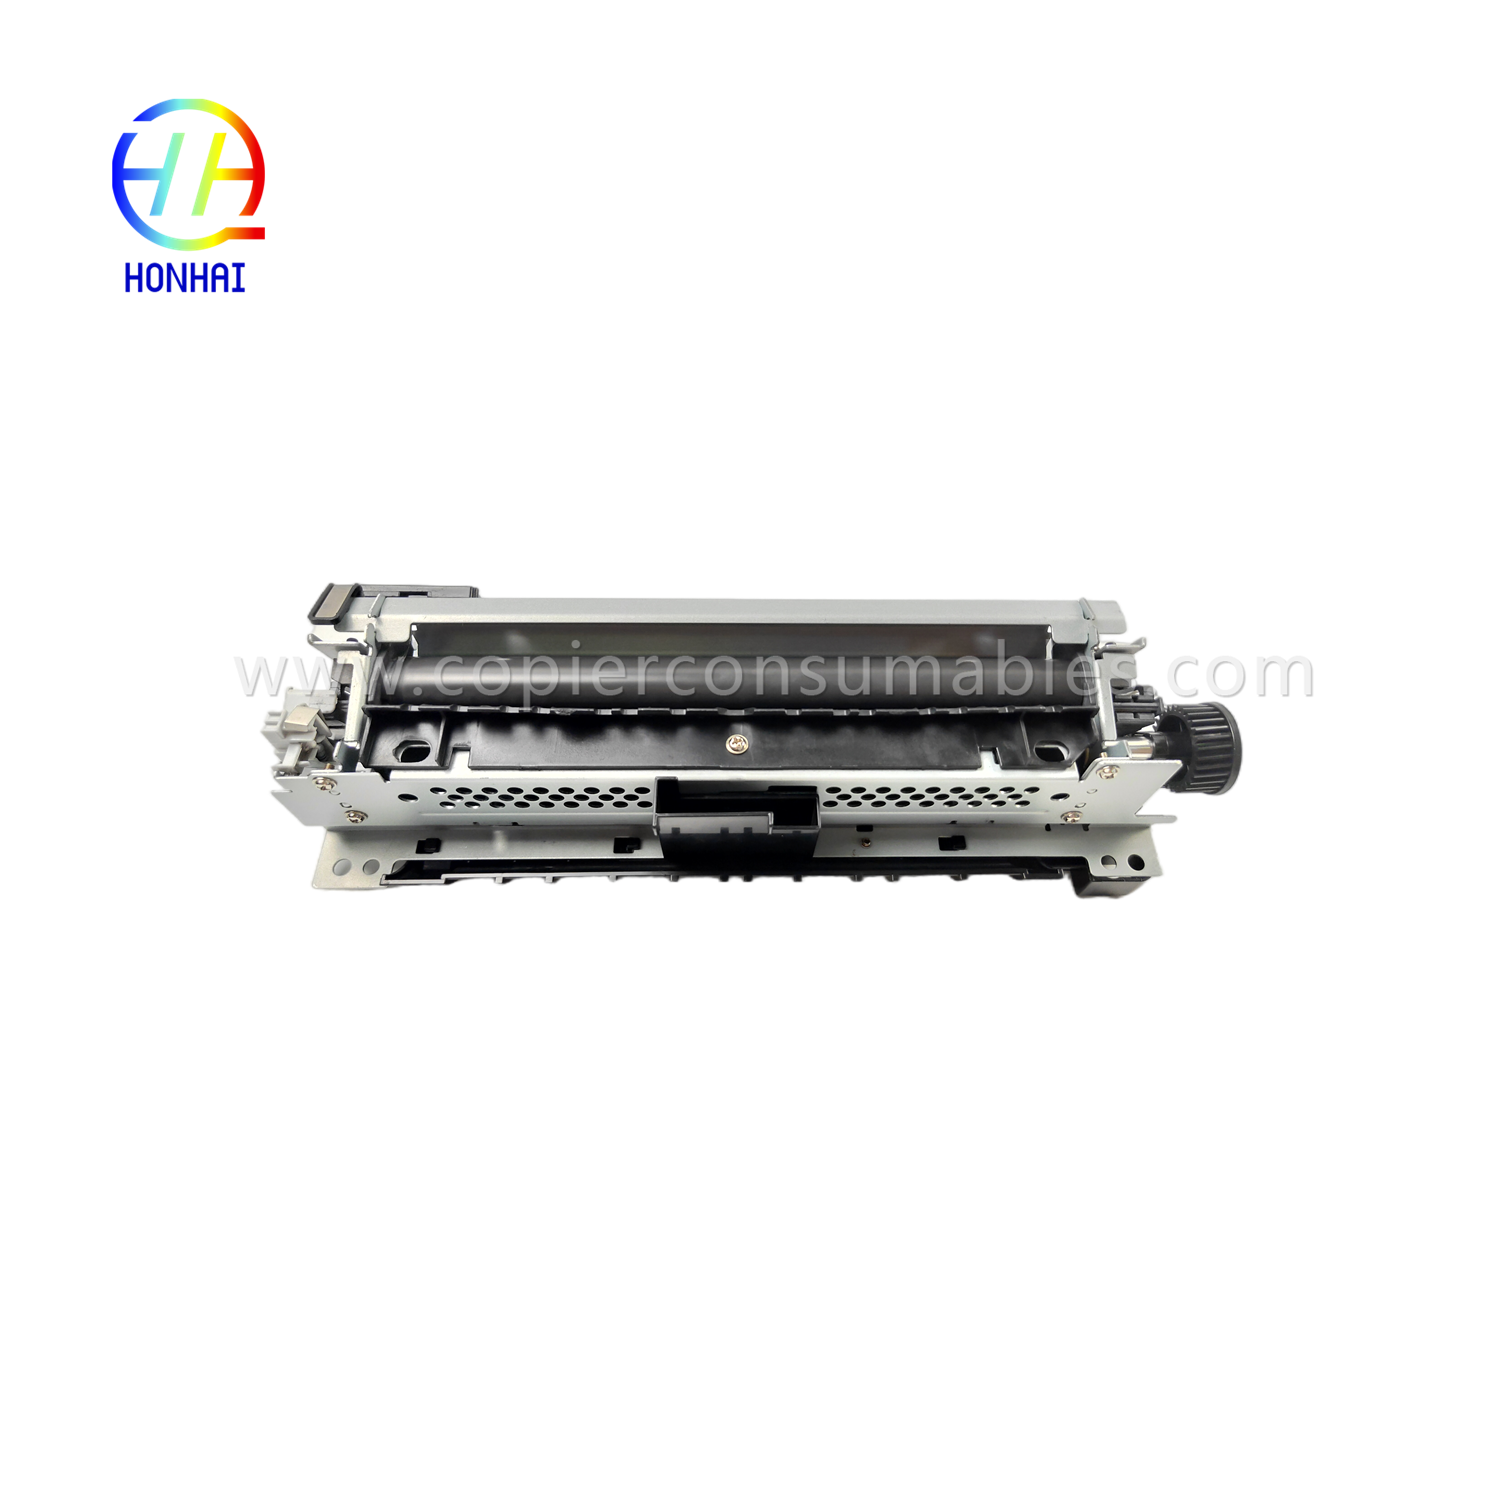 Fuser Assembly 220V (Japan) for HP 521 525 M521 M525 RM1-8508 RM1-8508-000 Fuser Unit